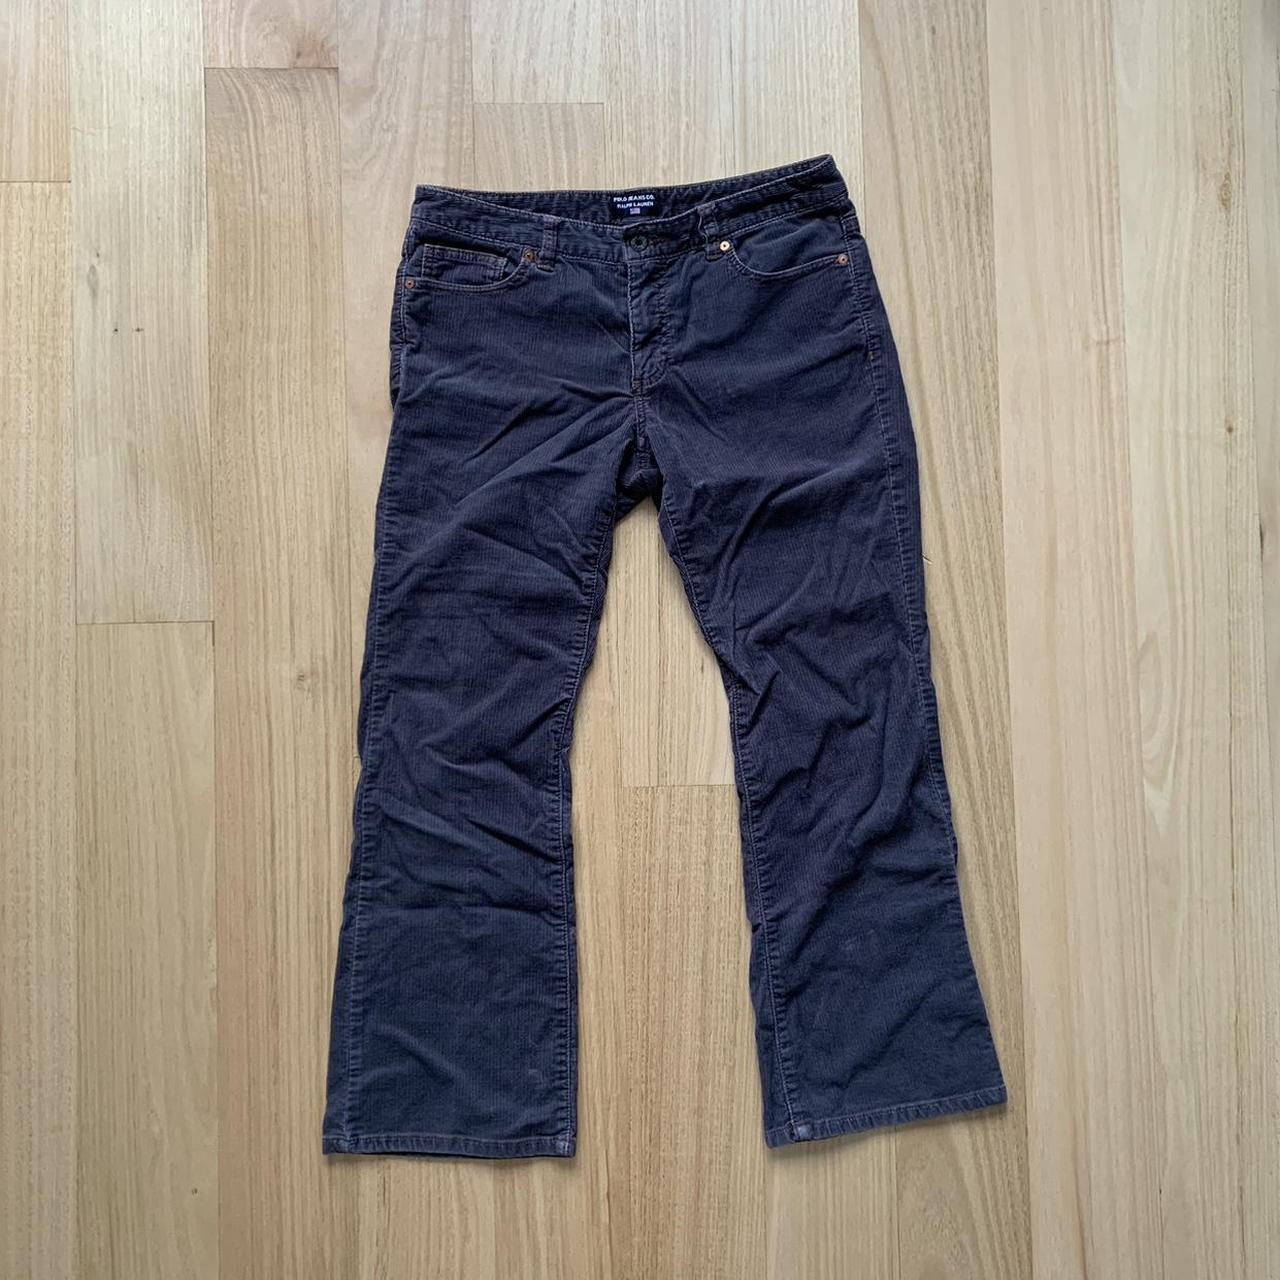 Vintage Ralph Lauren grey corduroy trousers. These... - Depop